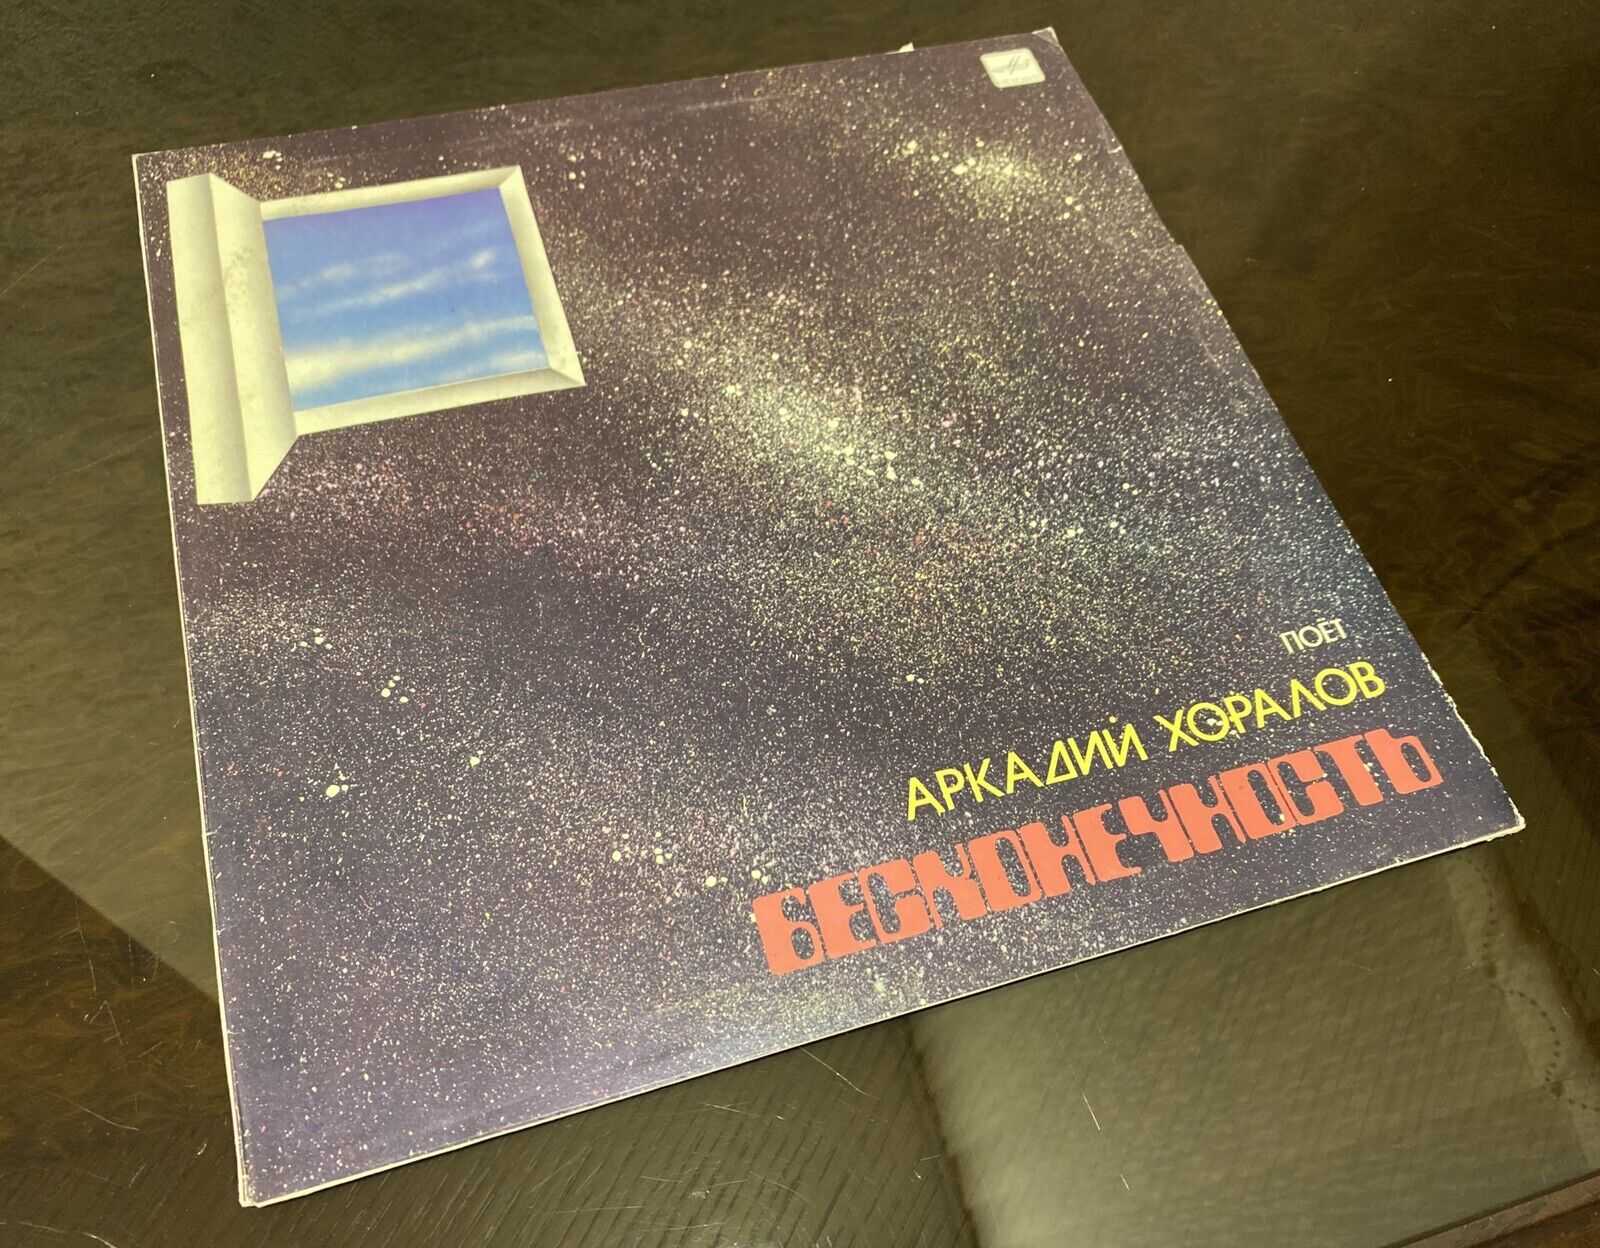 Vinyl Record - Arkady Khoralov - Infinity ( Бесконечность), LP Melodia, 1985s